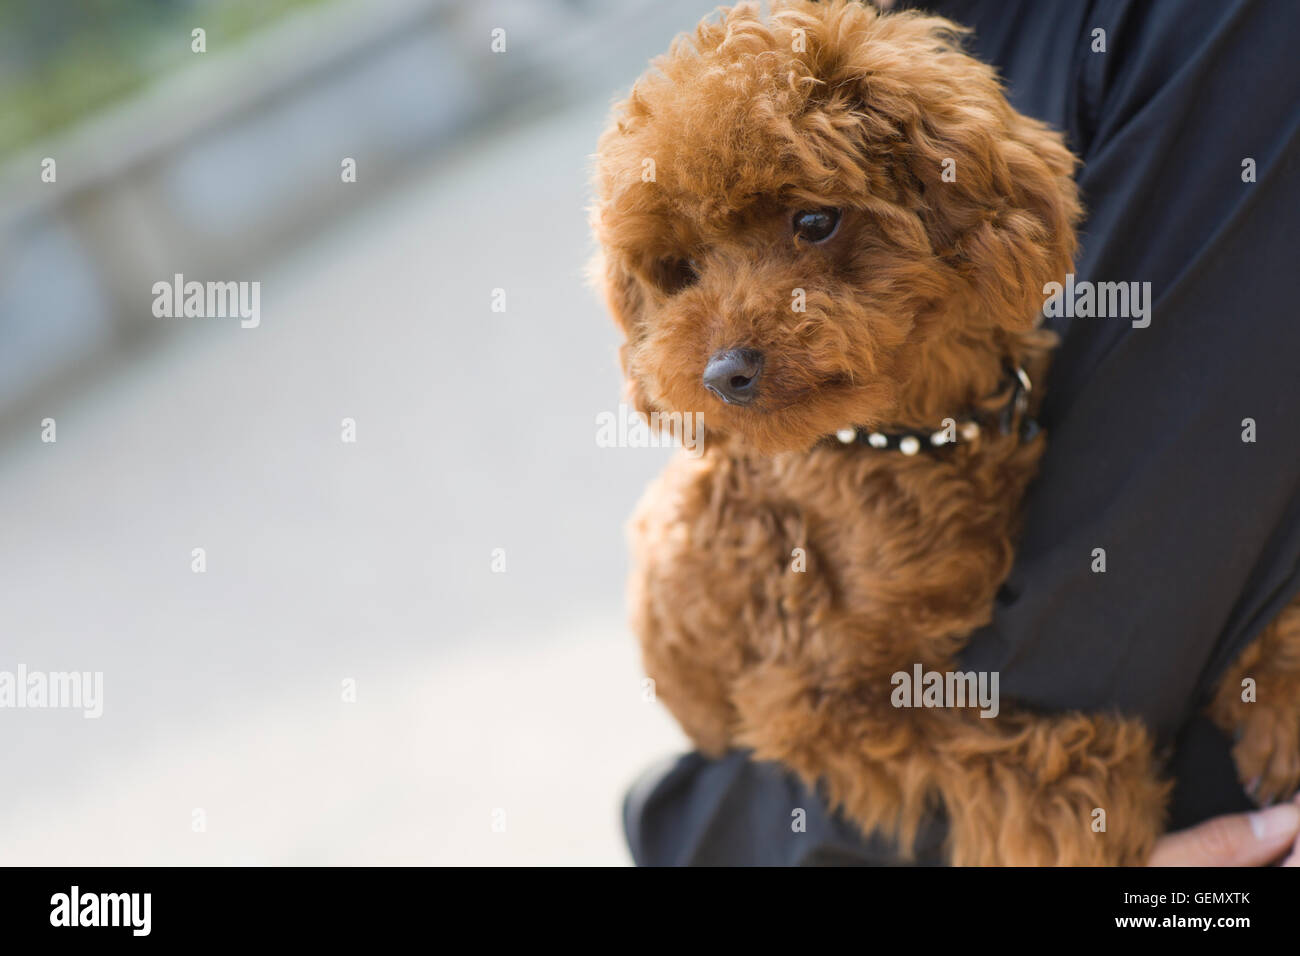 Niedliche Teddy Hund Stockfotografie - Alamy